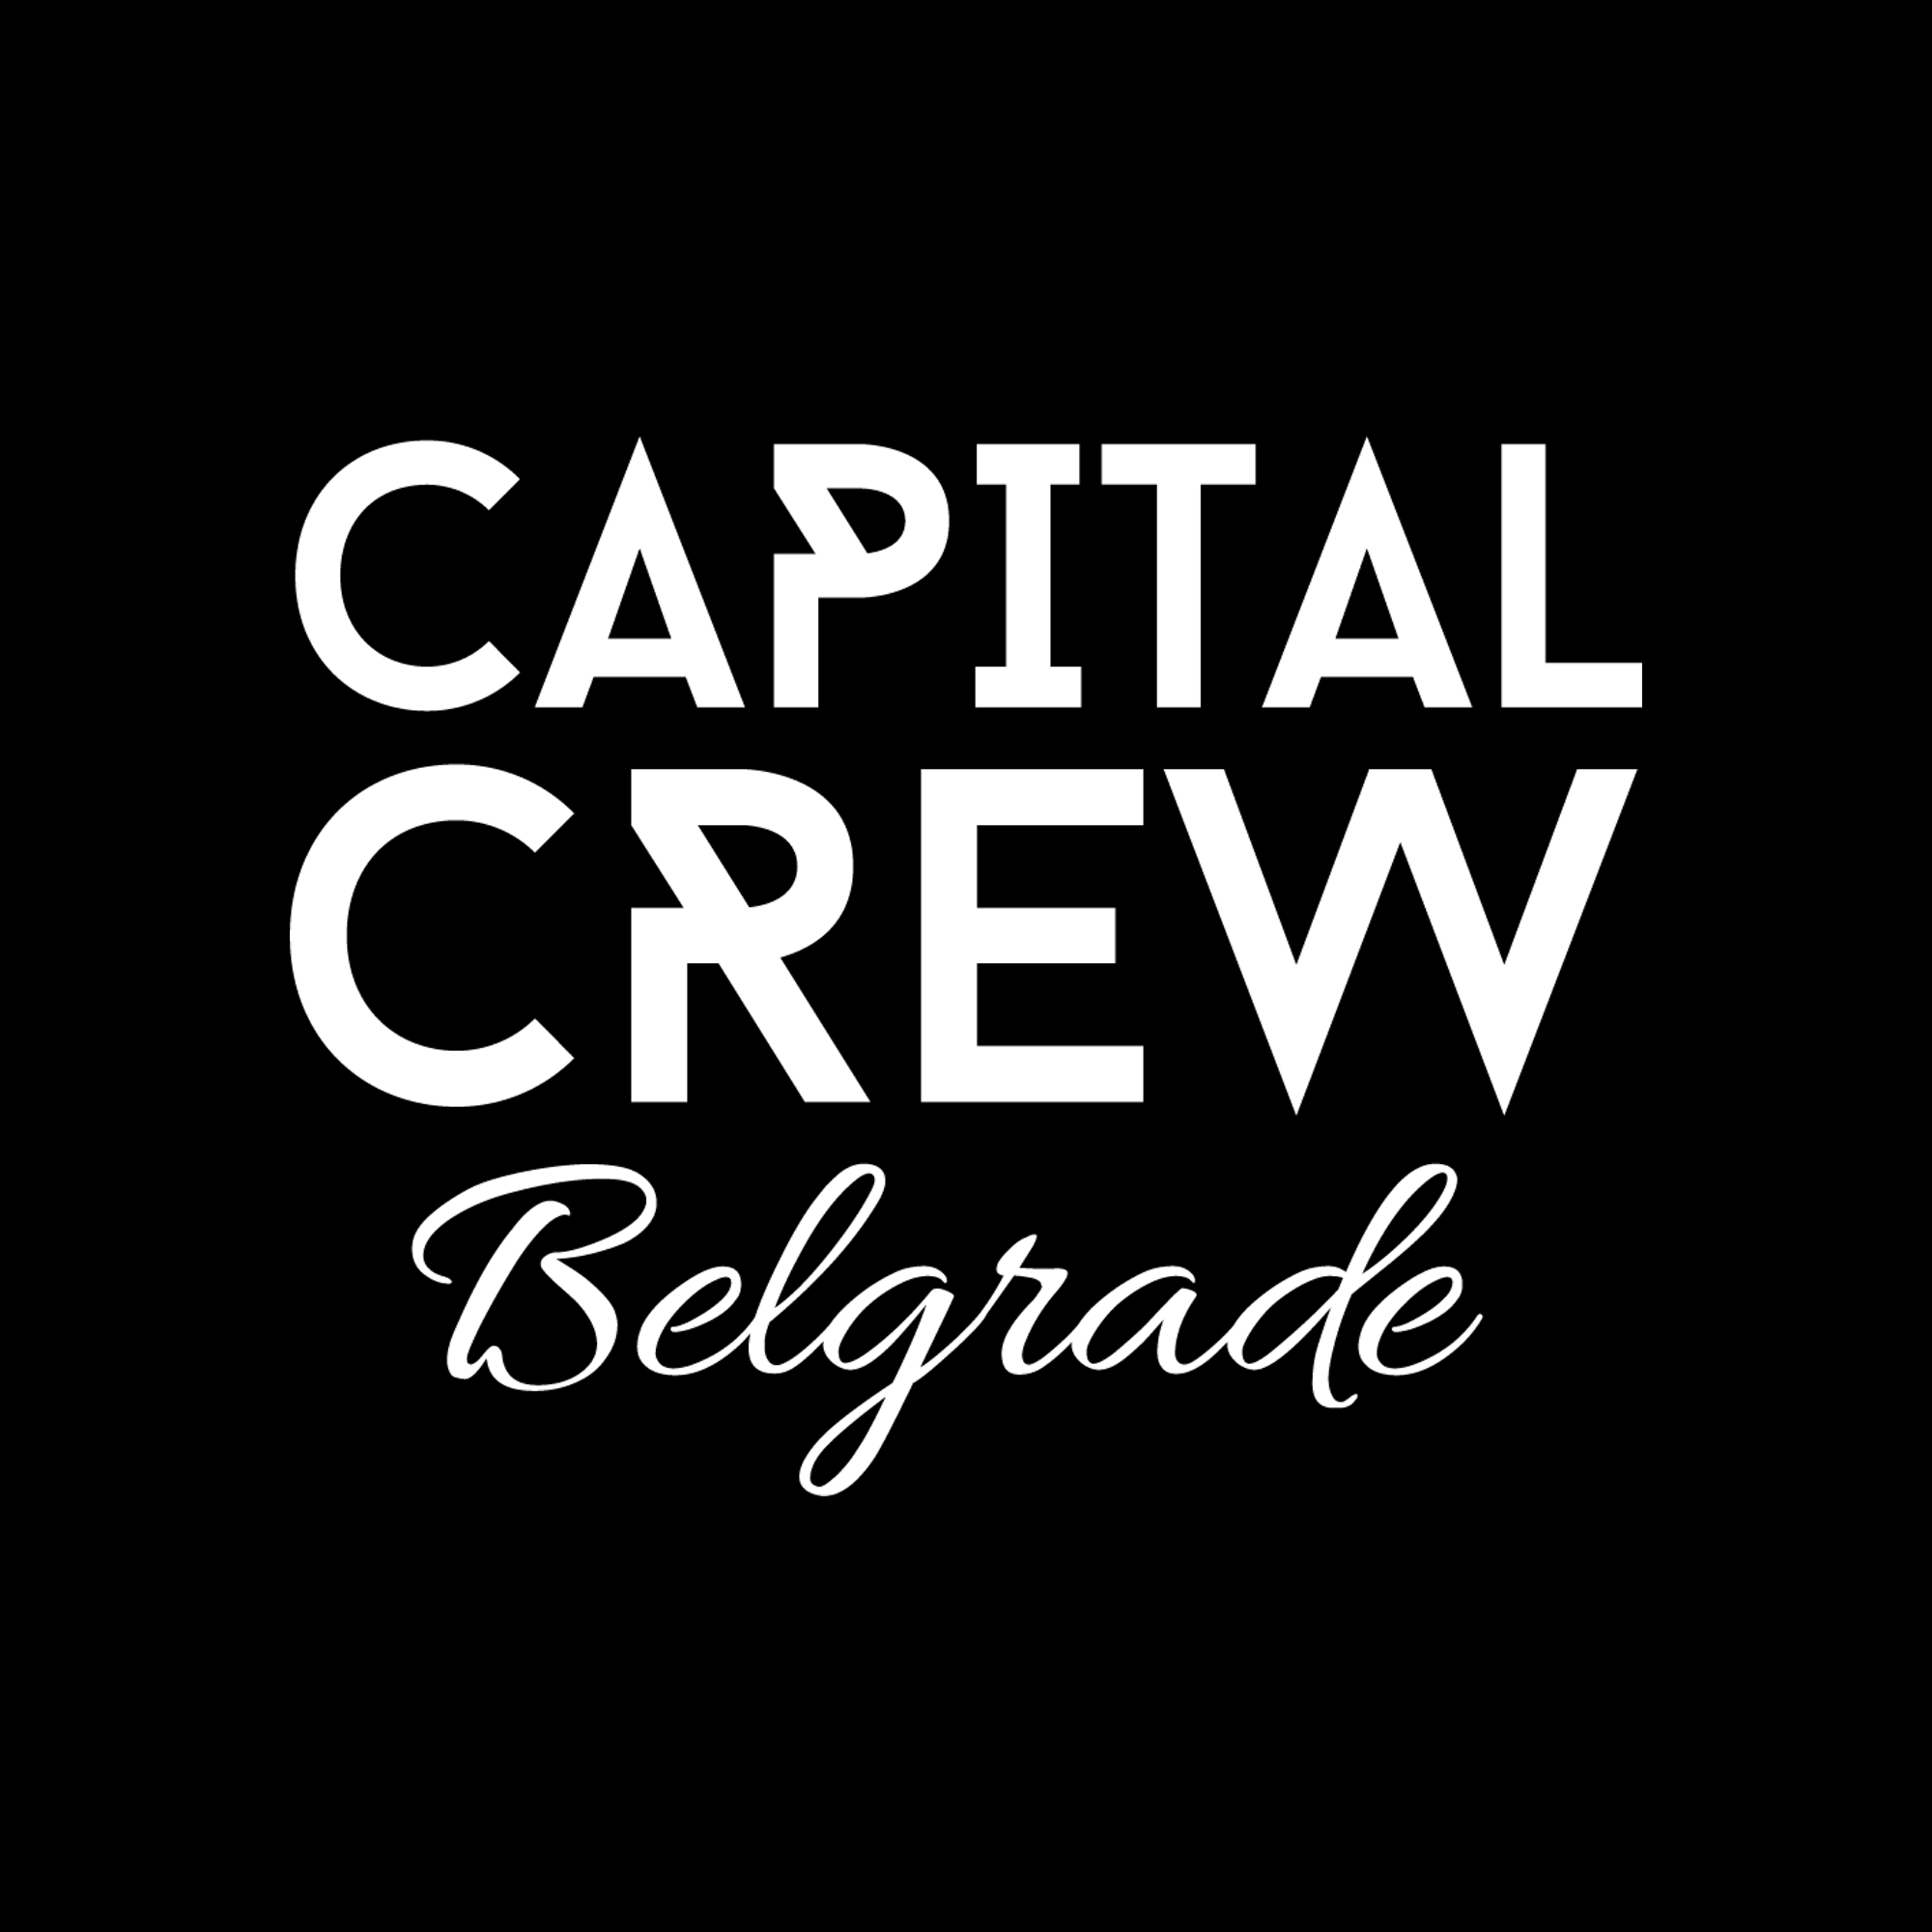 Capital Crew Belgrade Logo